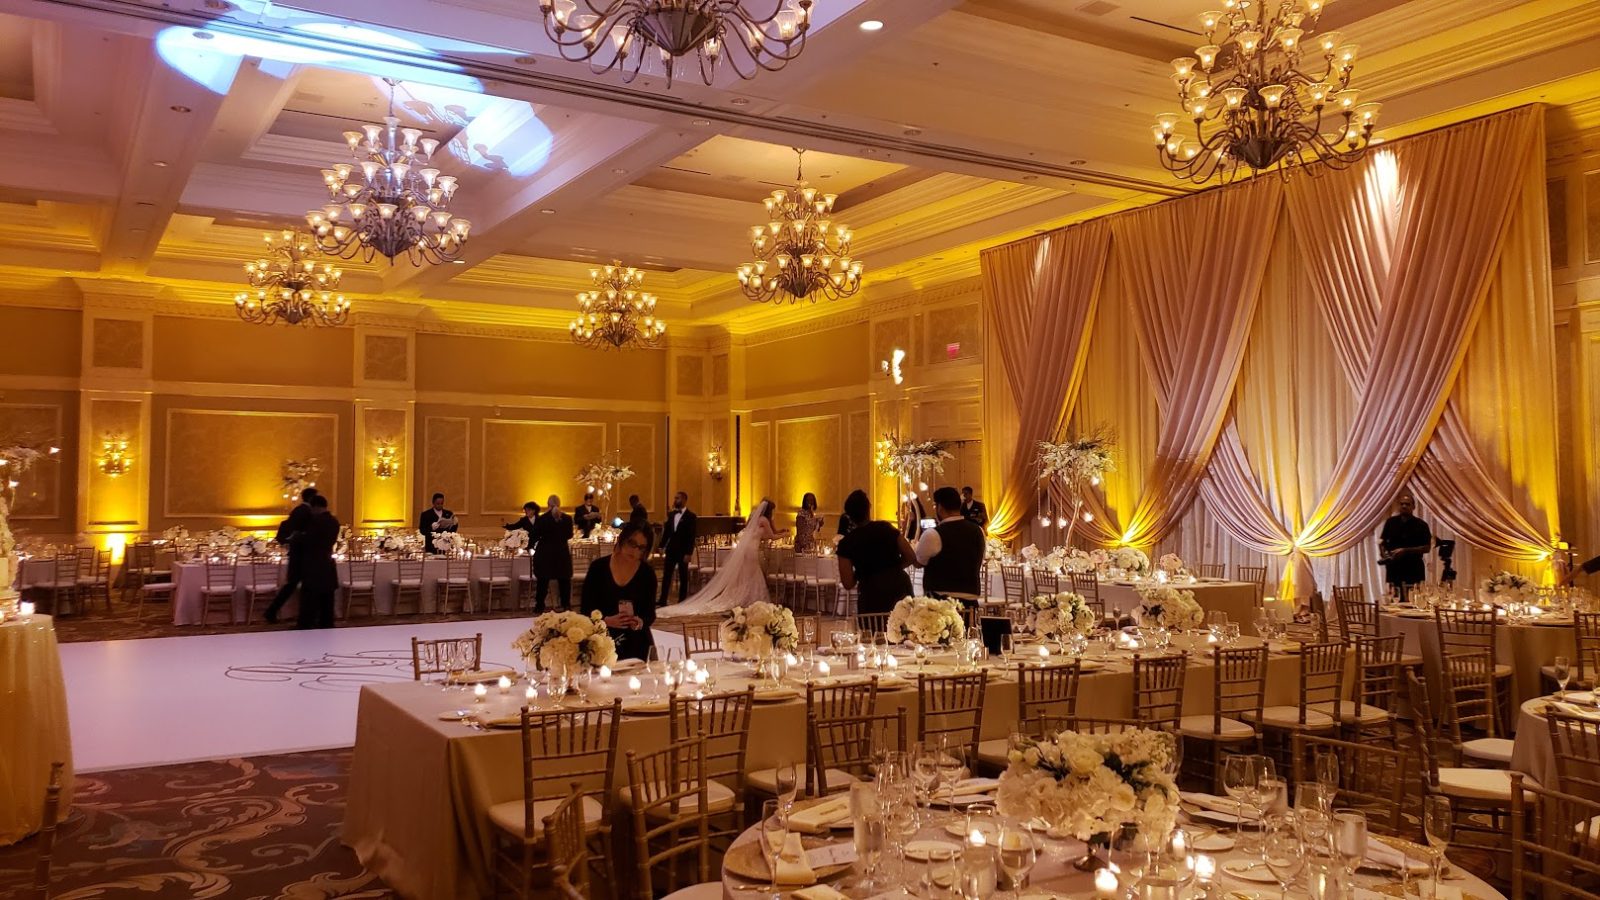 Warm banquet lighting Waldorf Astoria Grand Ballroom Amber Uplights